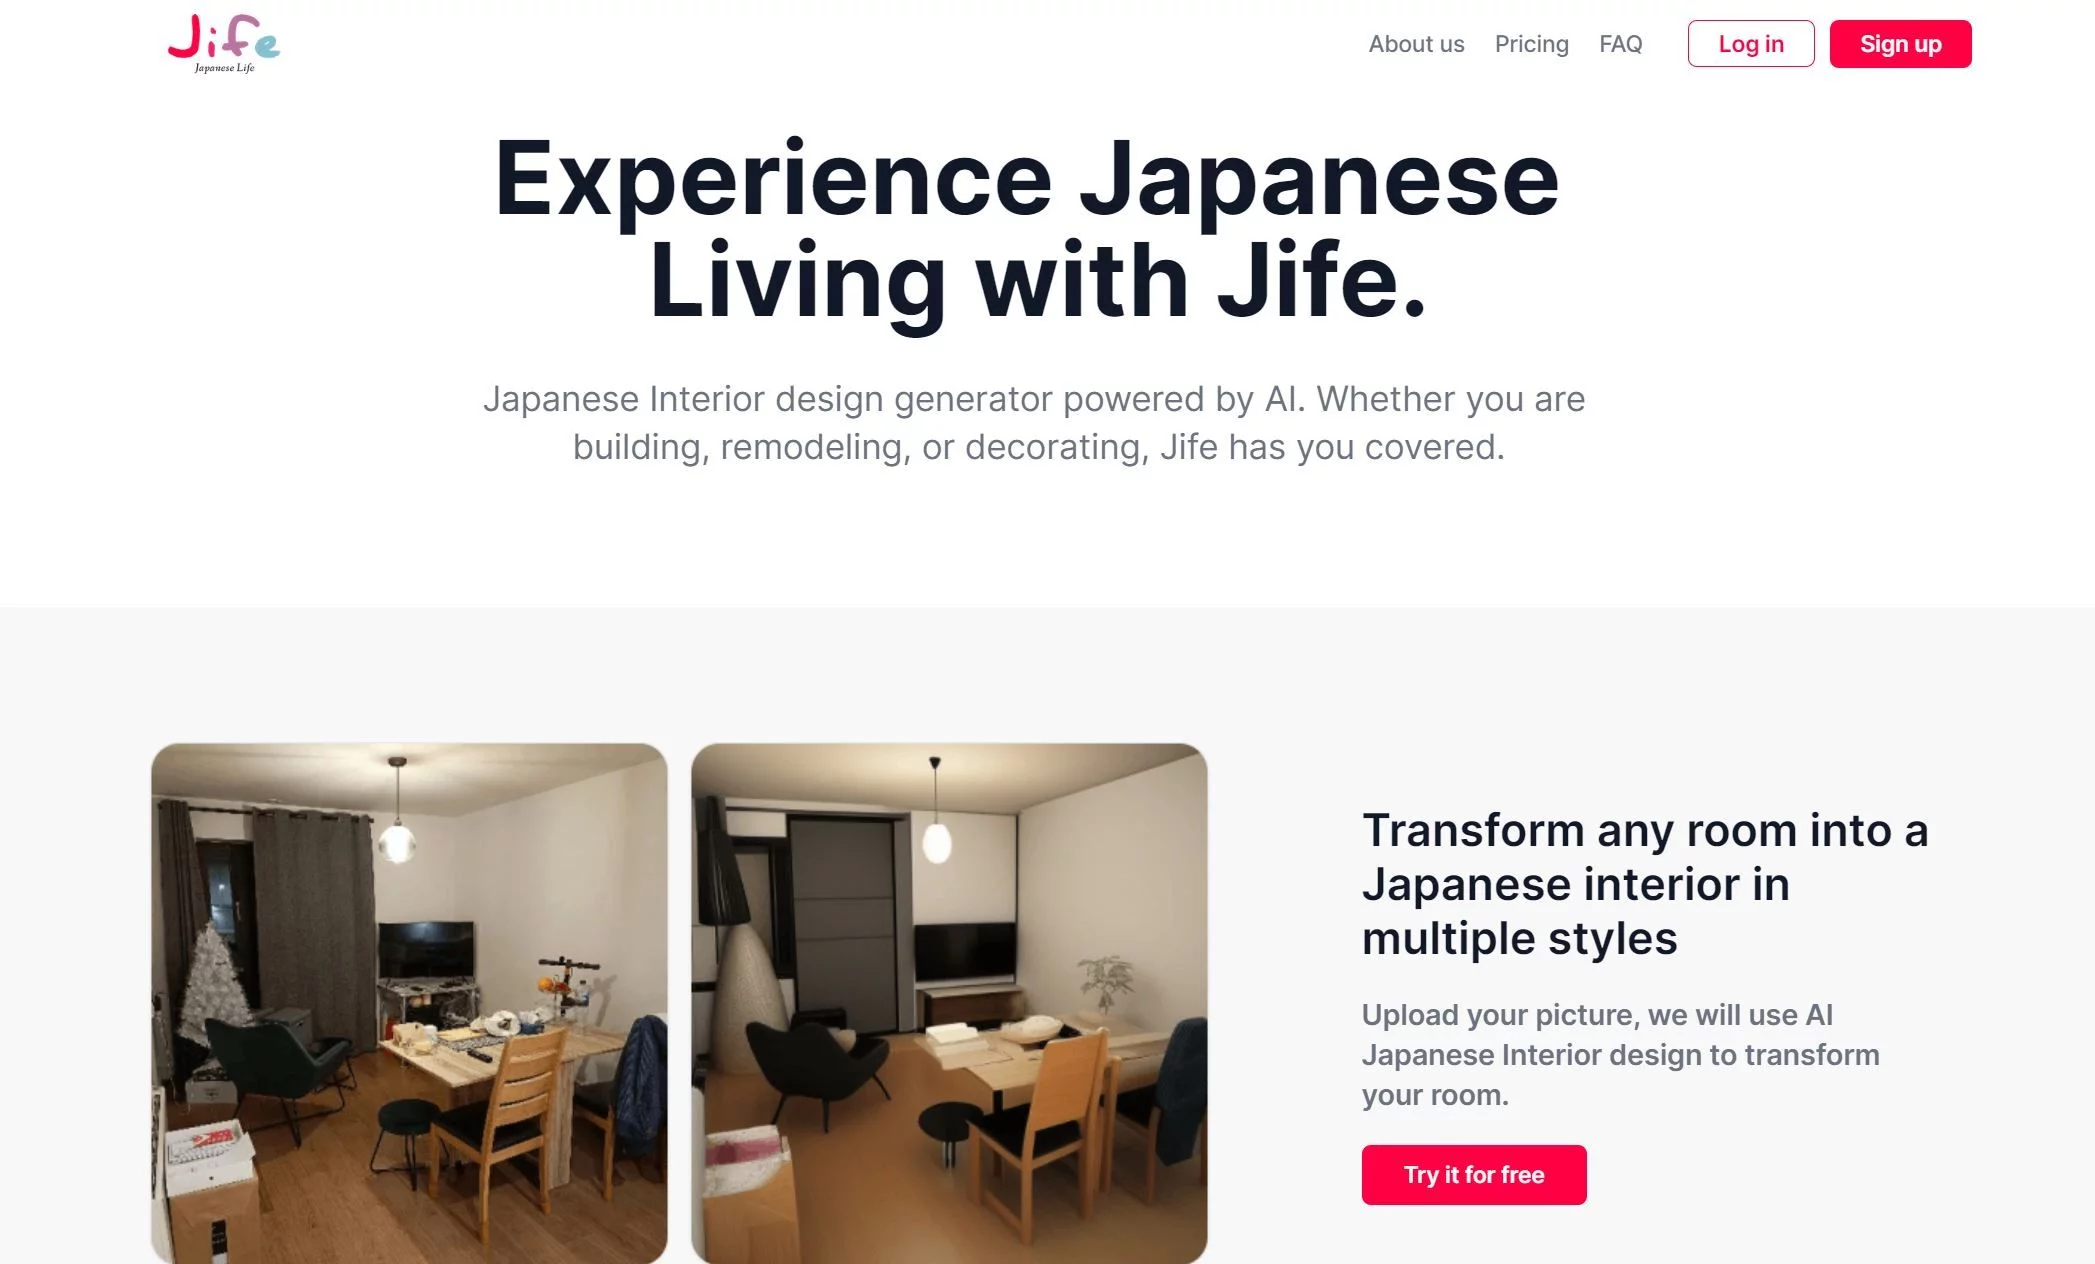  Japanese Interior Design generator Powered by AI.